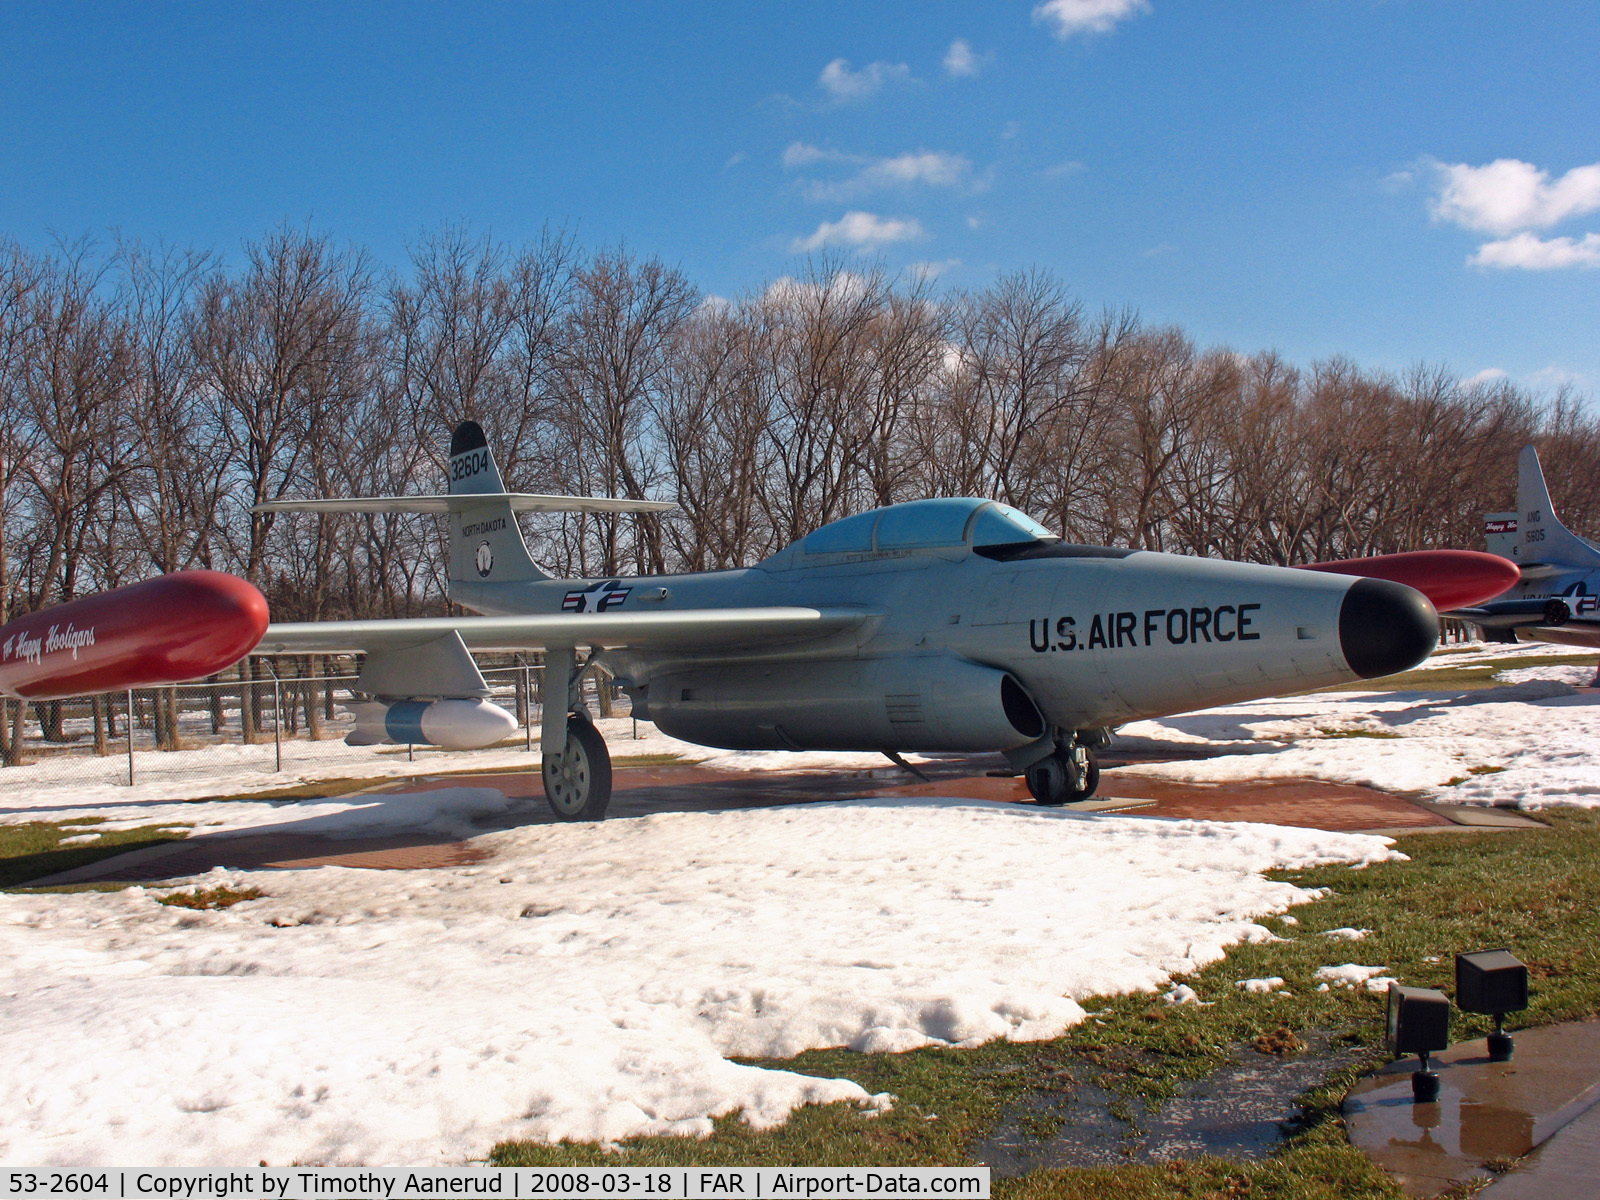 53-2604, 1953 Northrop F-89J Scorpion C/N Not found 53-2604, Northrop F-89D-65-NO Scorpion, converted to F-89J, North Dakota Air National Guard display area. 53-2604